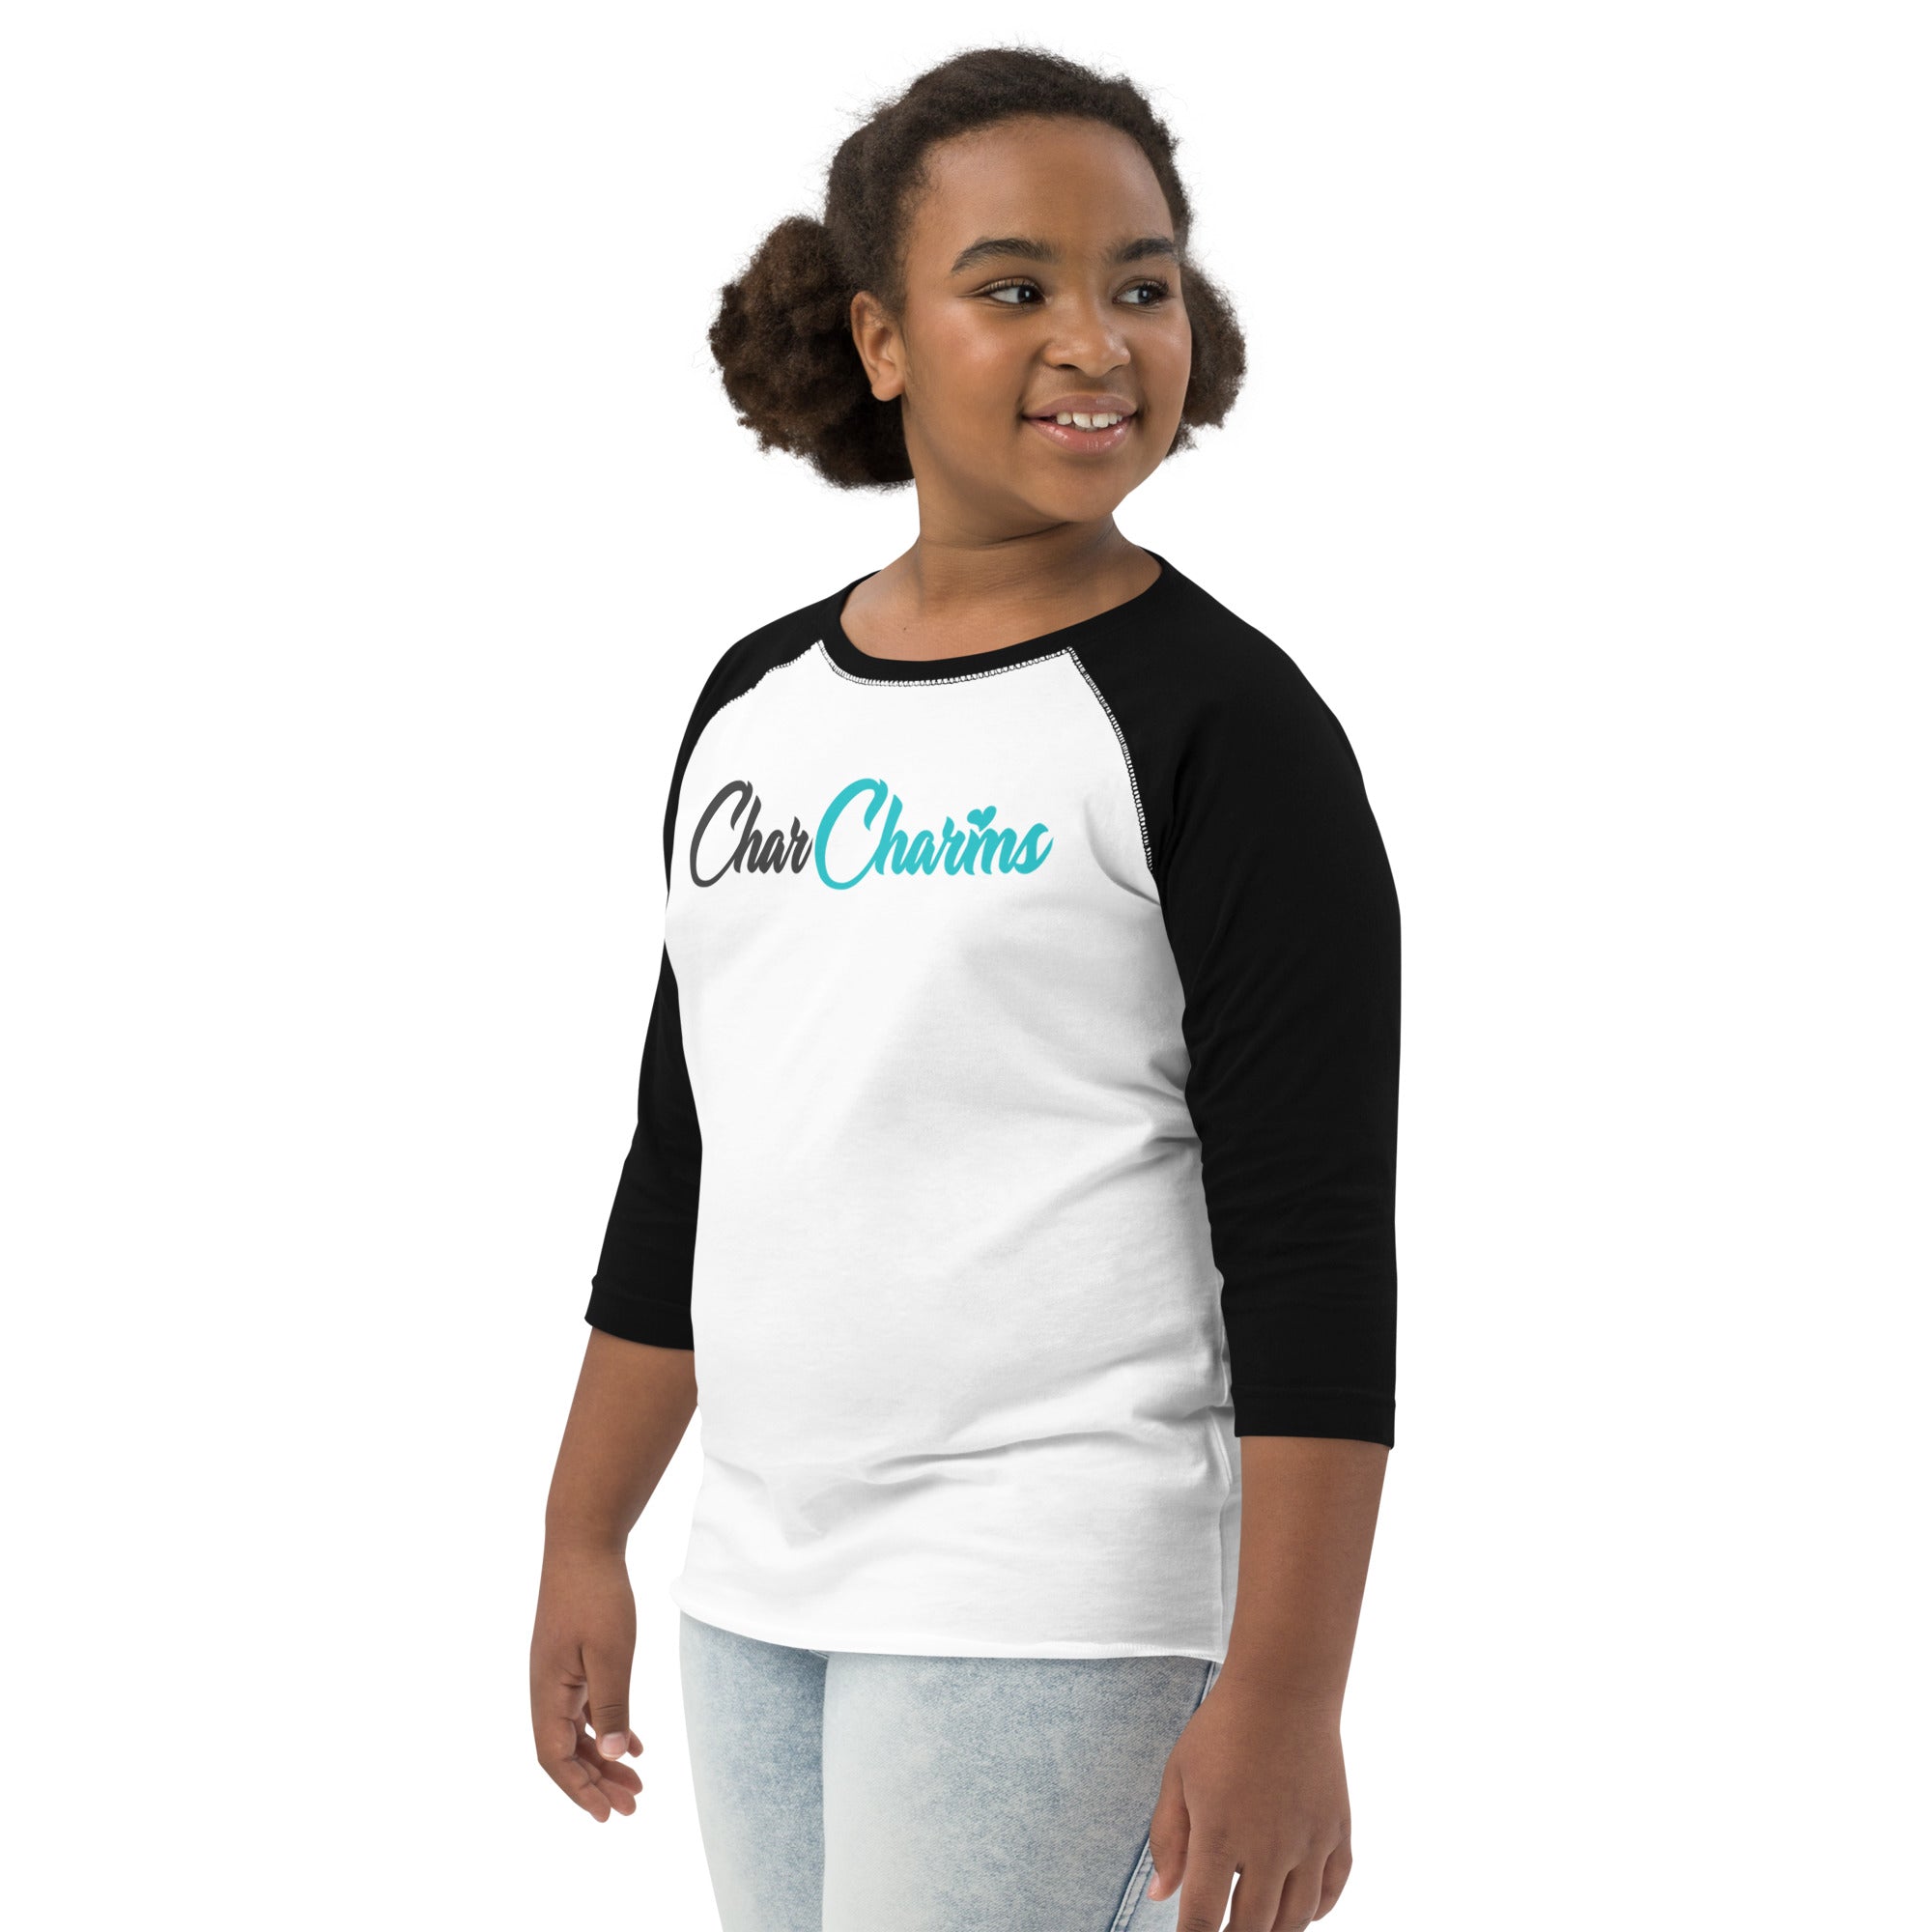 CharCharms Merchandise Kids Baseball Tee Tshirt